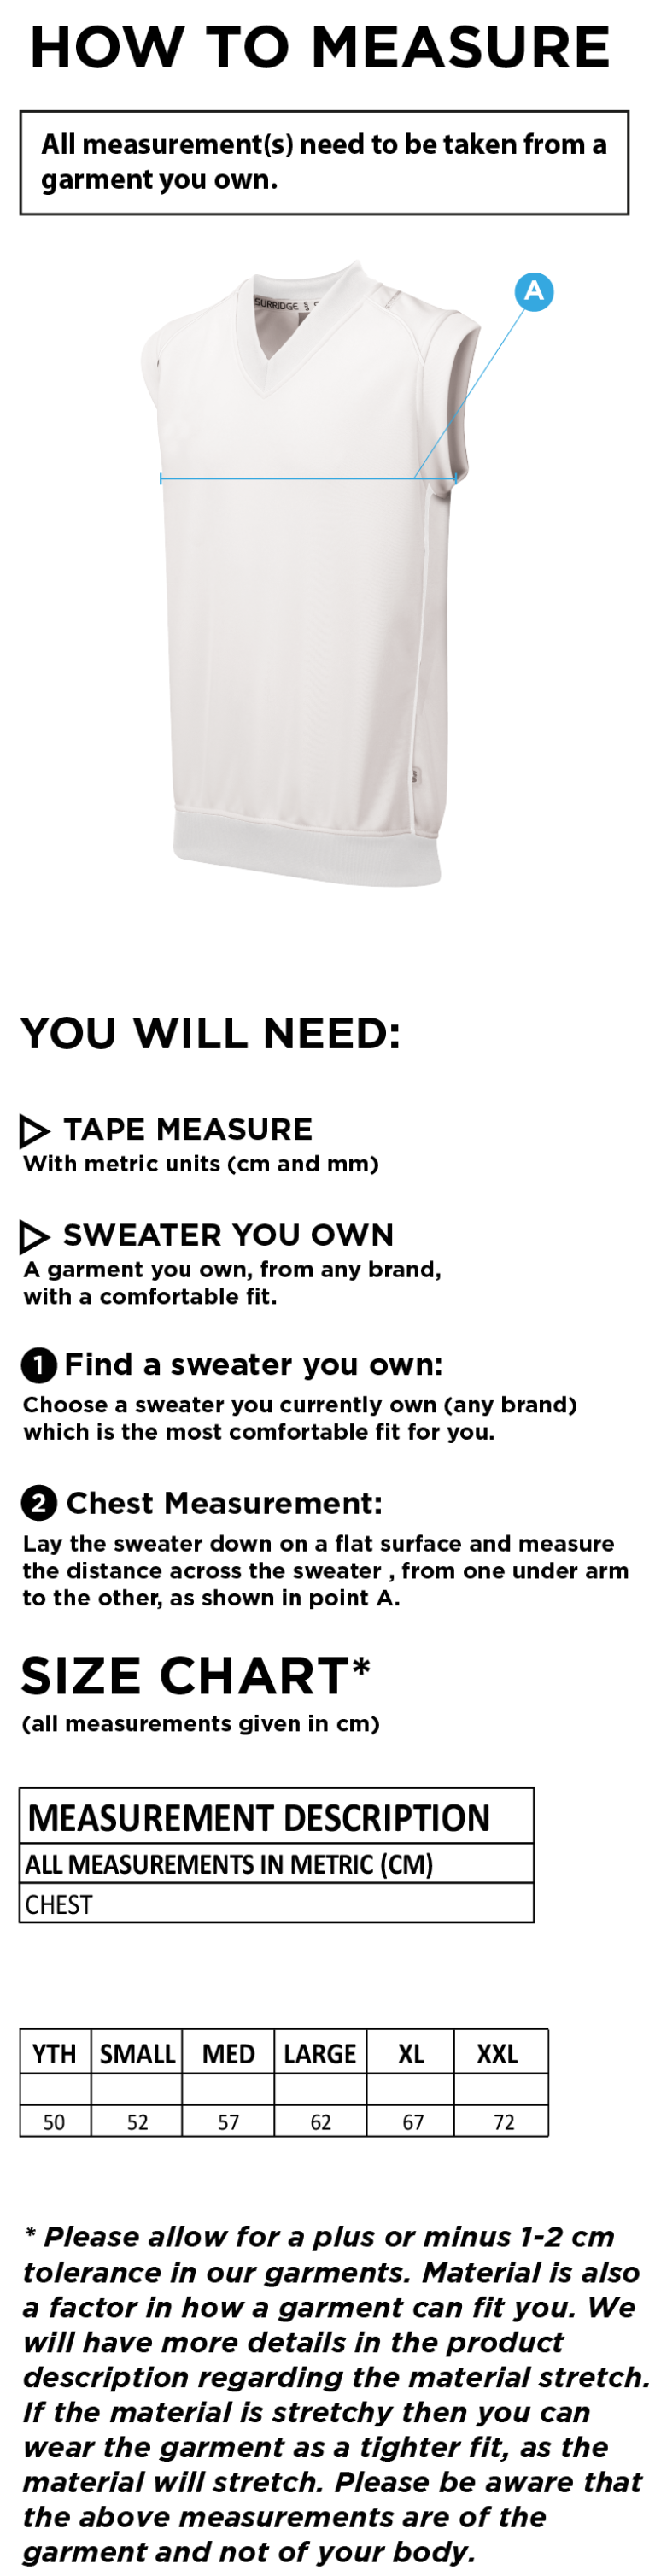 Stockport Trinity CC - Sleeveless Sweater - Size Guide